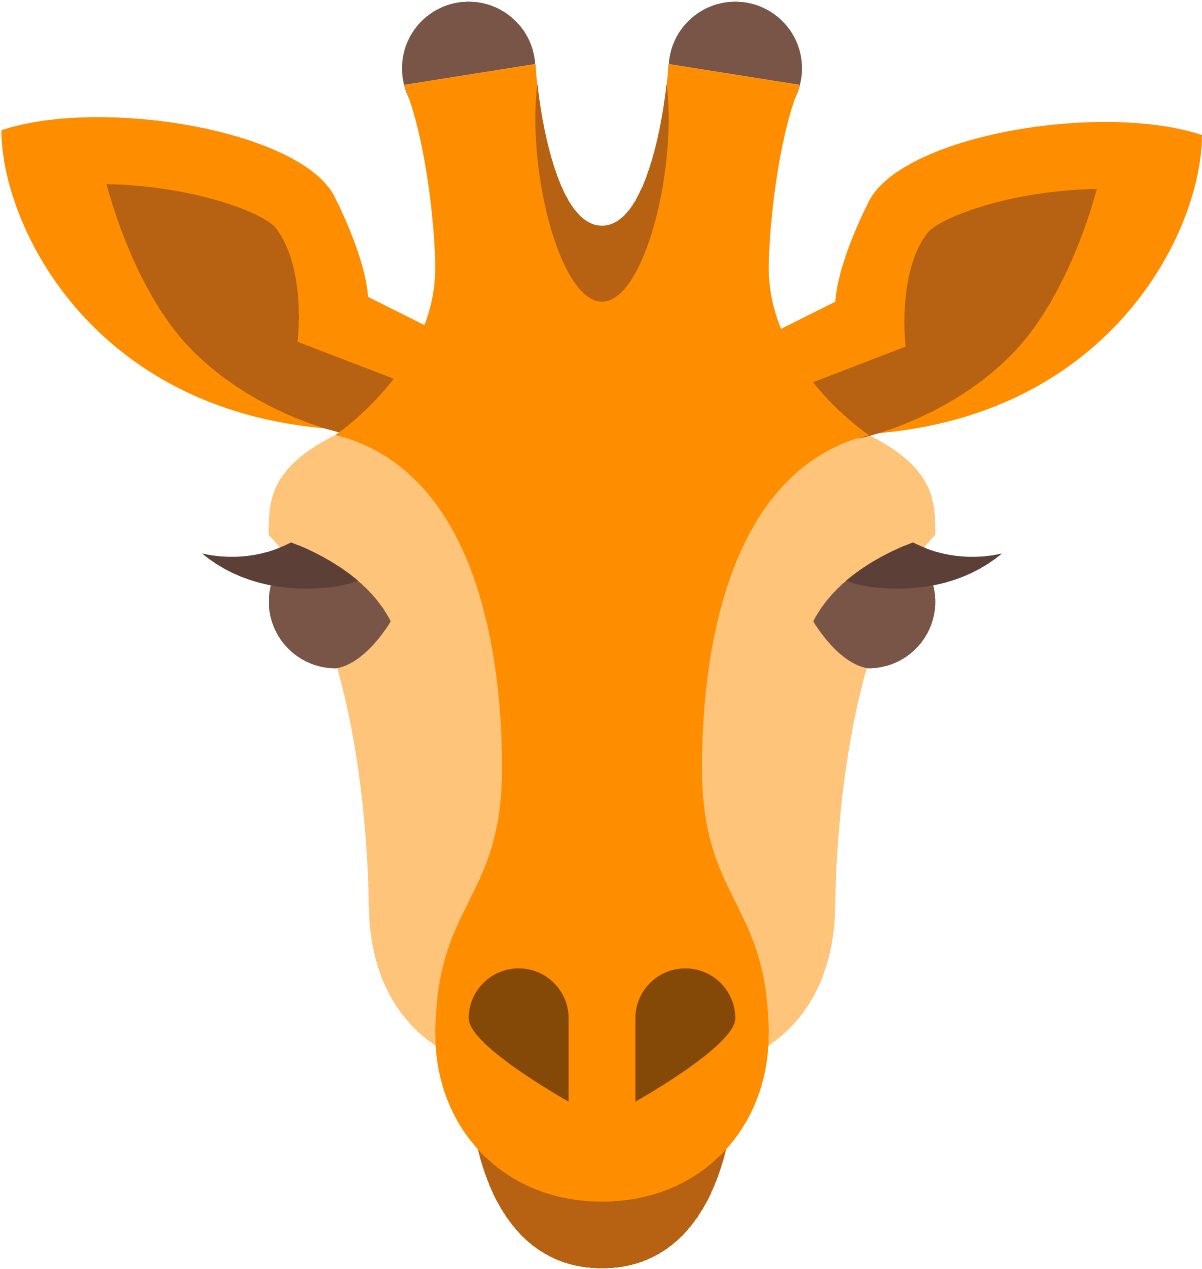 Stylized Giraffe Head Illustration PNG